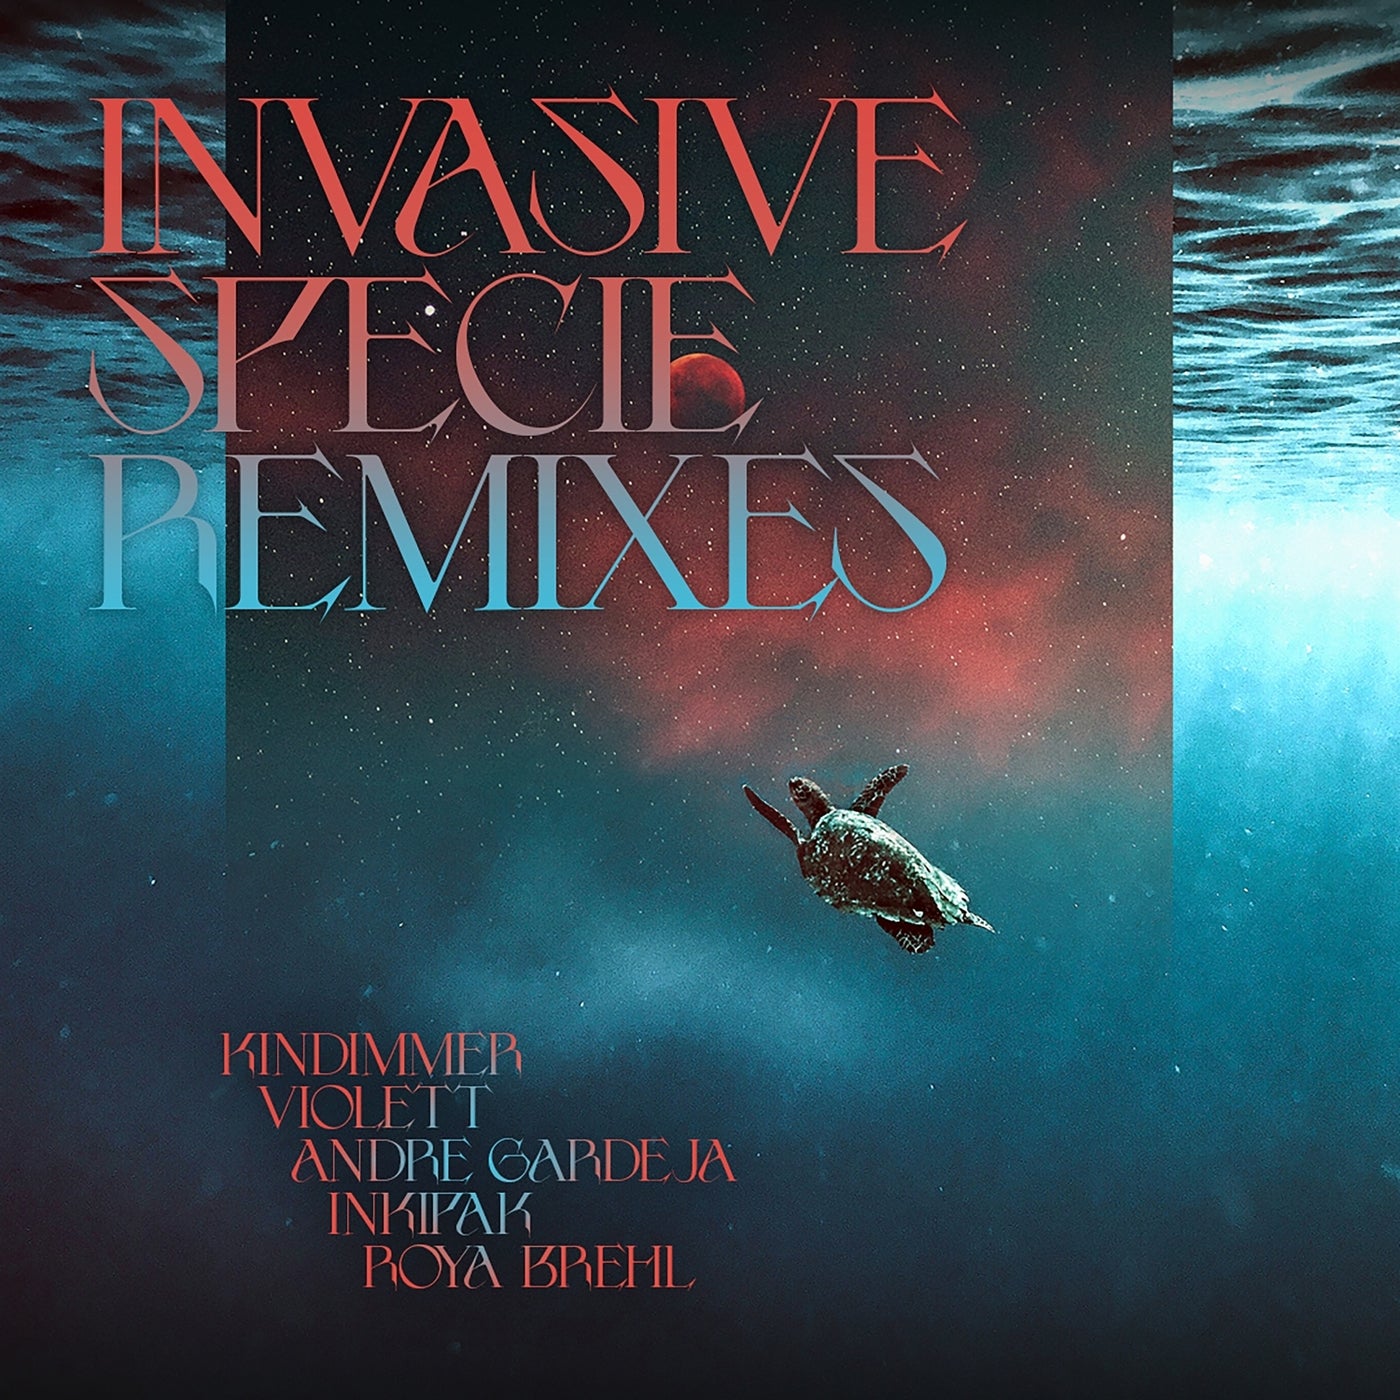 Invasive Specie Remixes